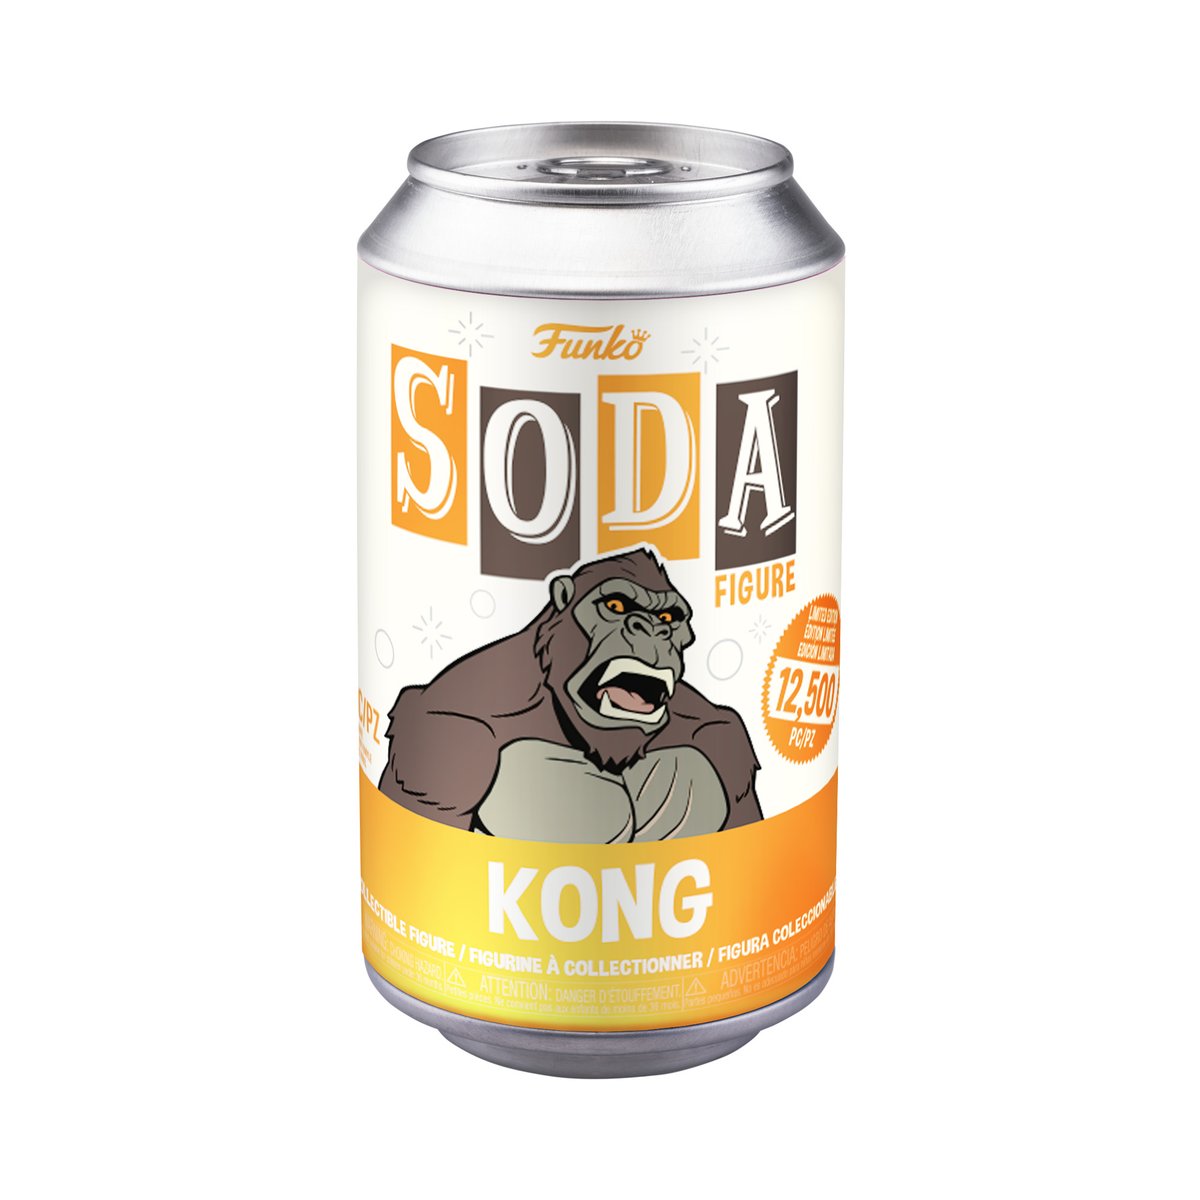 It's #FunkoSODASaturday! RT and follow @OriginalFunko for the chance to WIN the Godzilla vs Kong - Kong Funko SODA! #Funko #FunkoSODA #GodzillavsKong